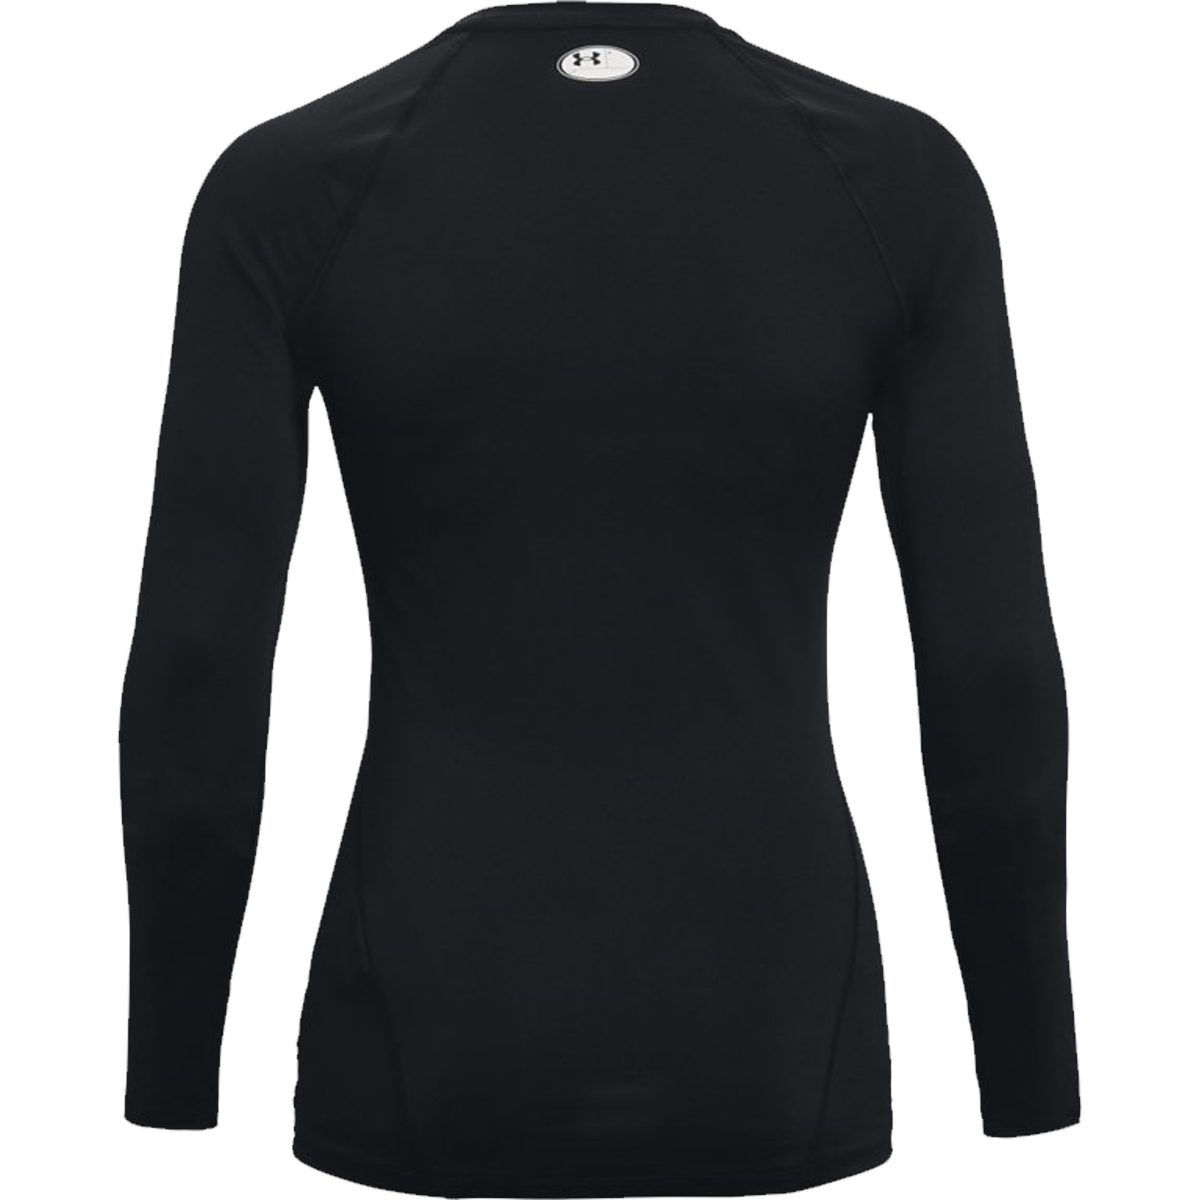 Ladies' Under Armour® Shirt - Black, Medium S-22088BL-M - Uline